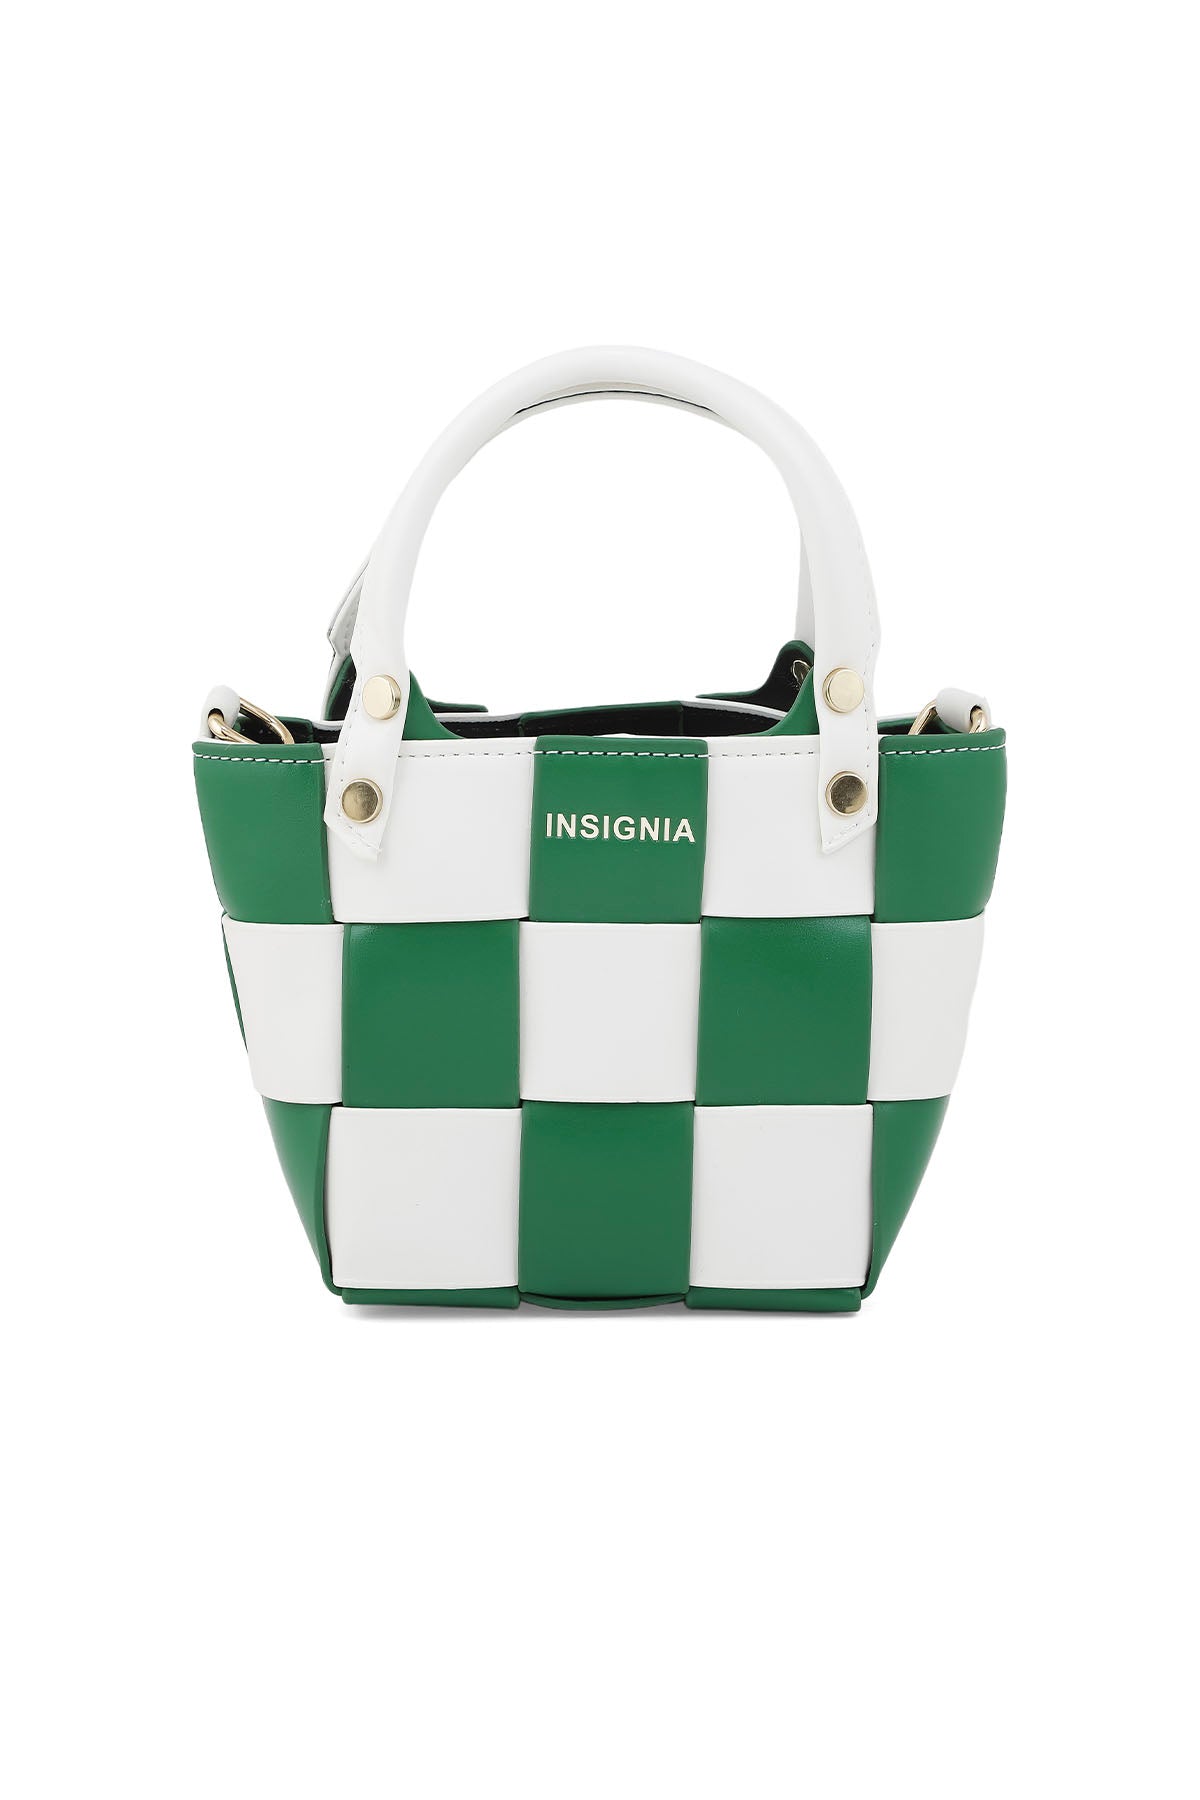 Top Handle Hand Bags B14952-Green